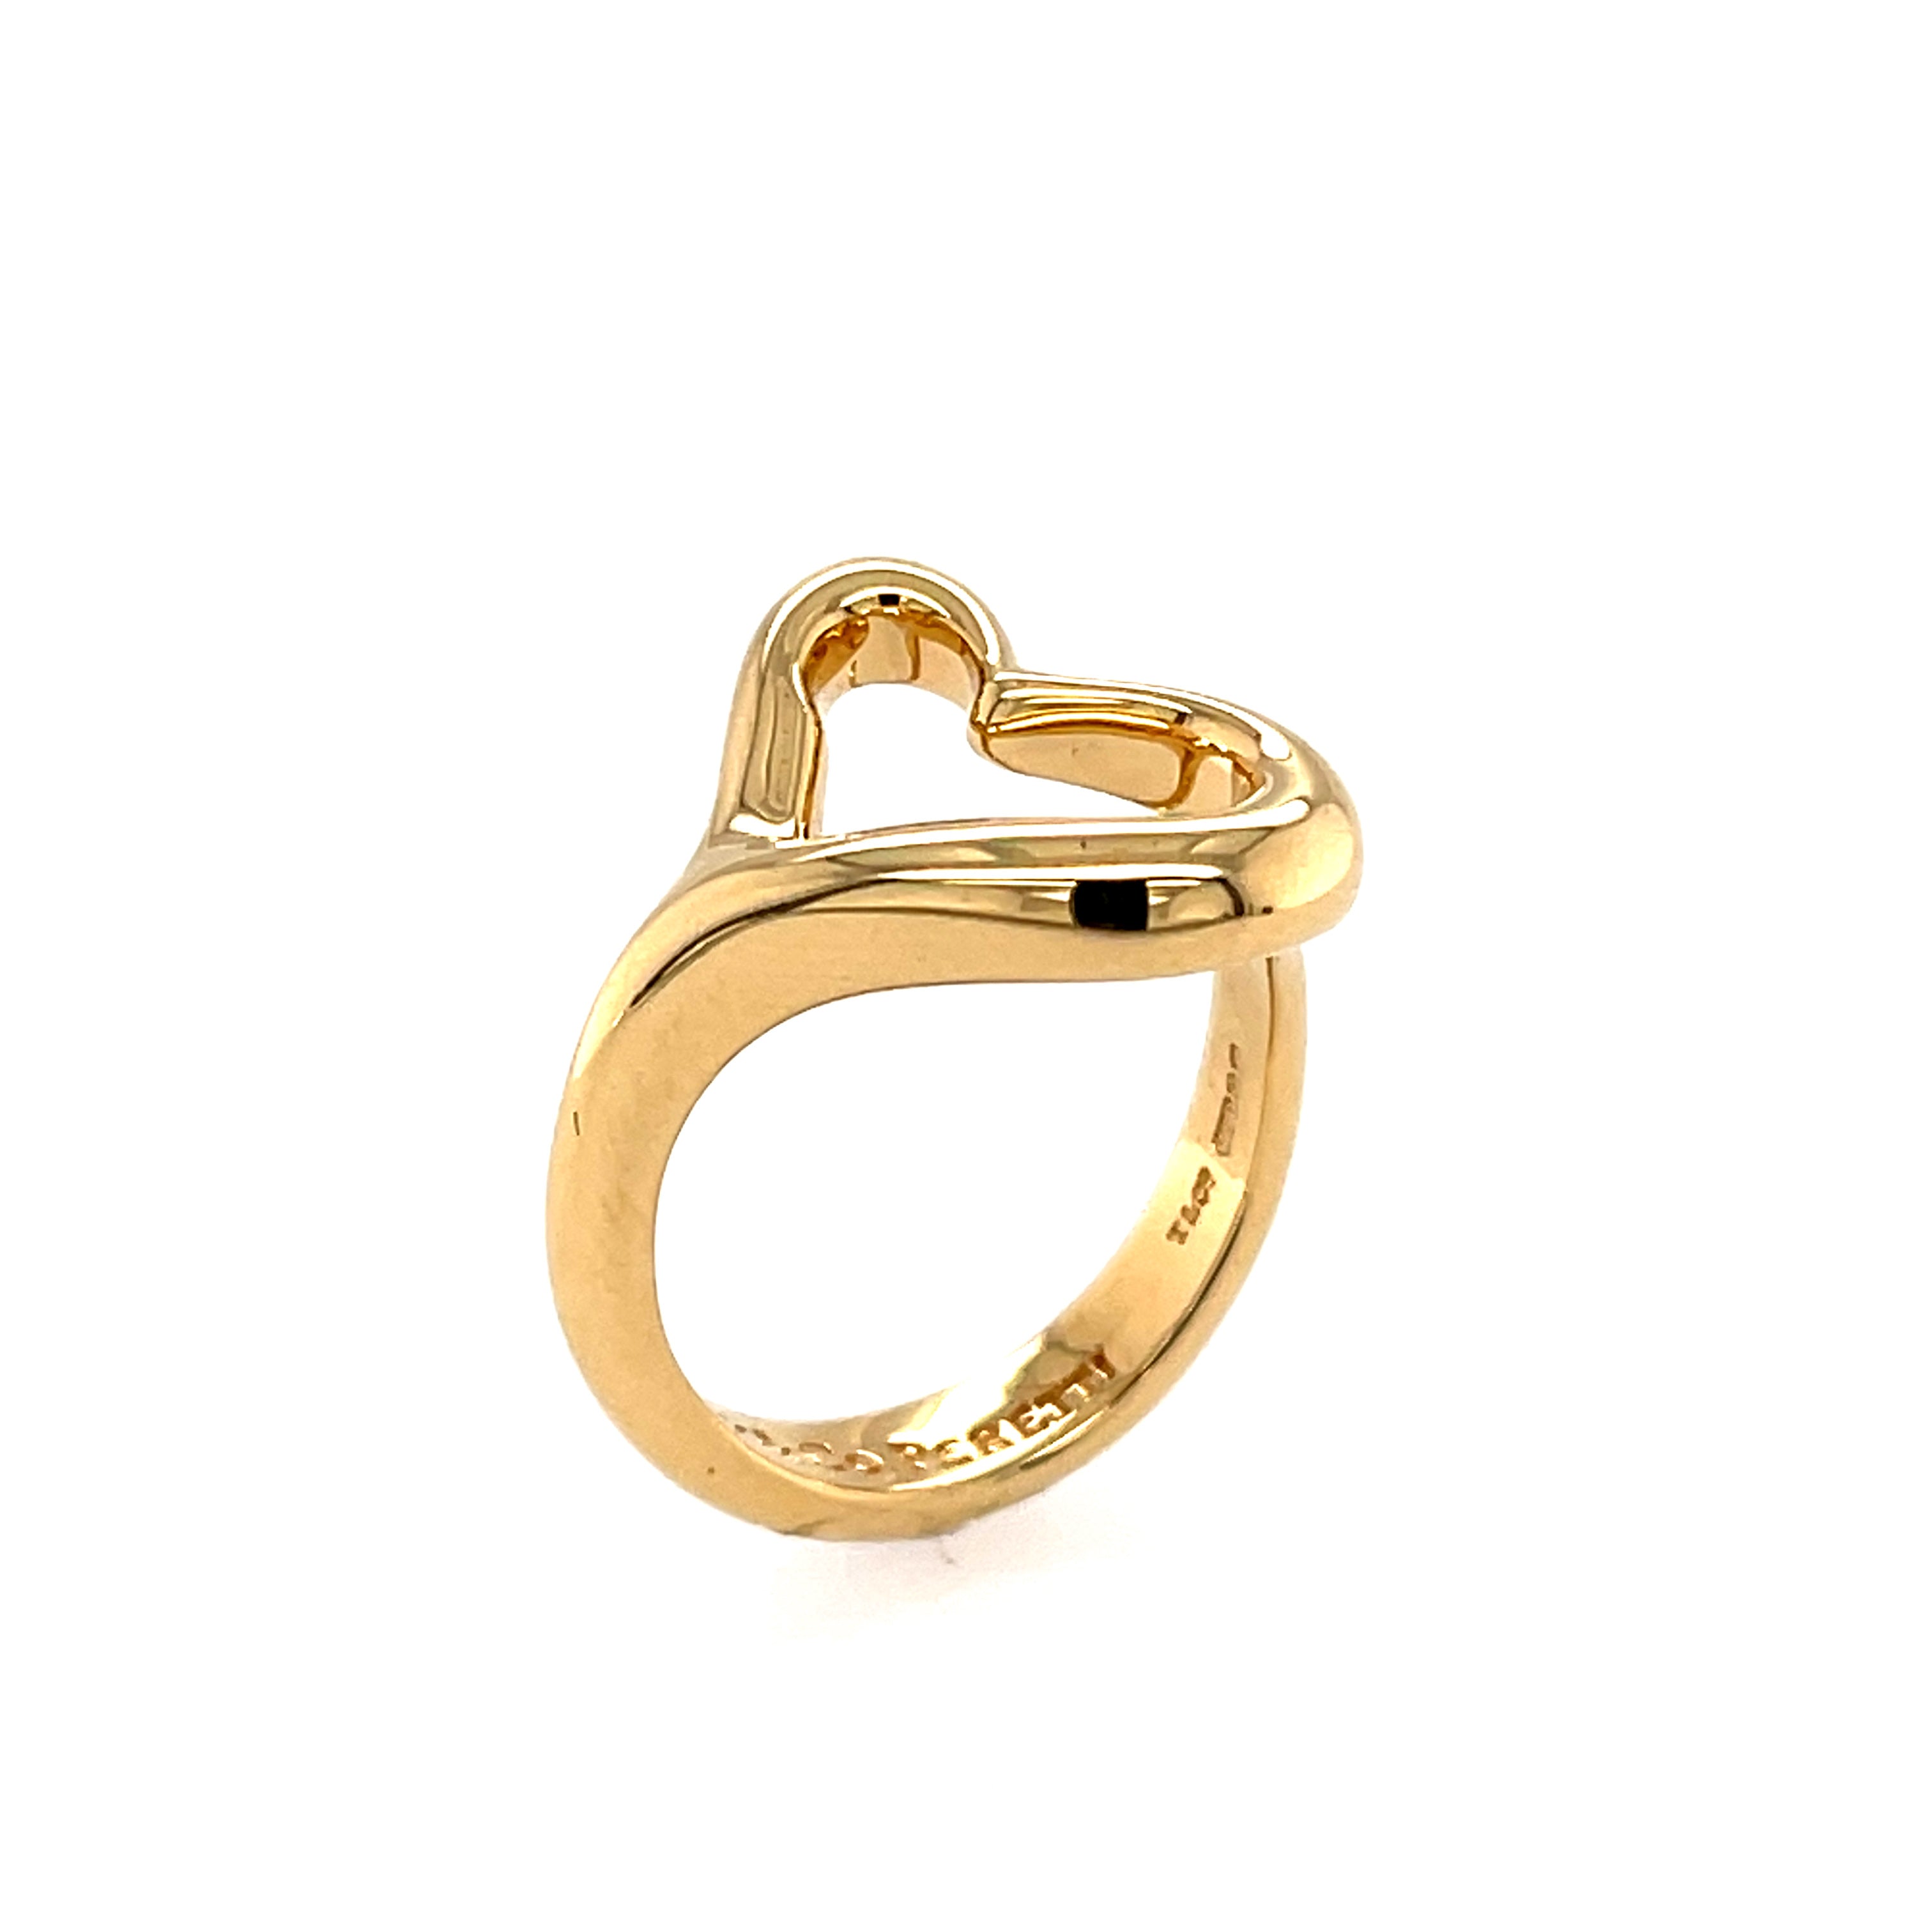 TIFFANY & CO 18ct Yellow Gold Elsa Peretti Open Heart Ring - Size J (UK)